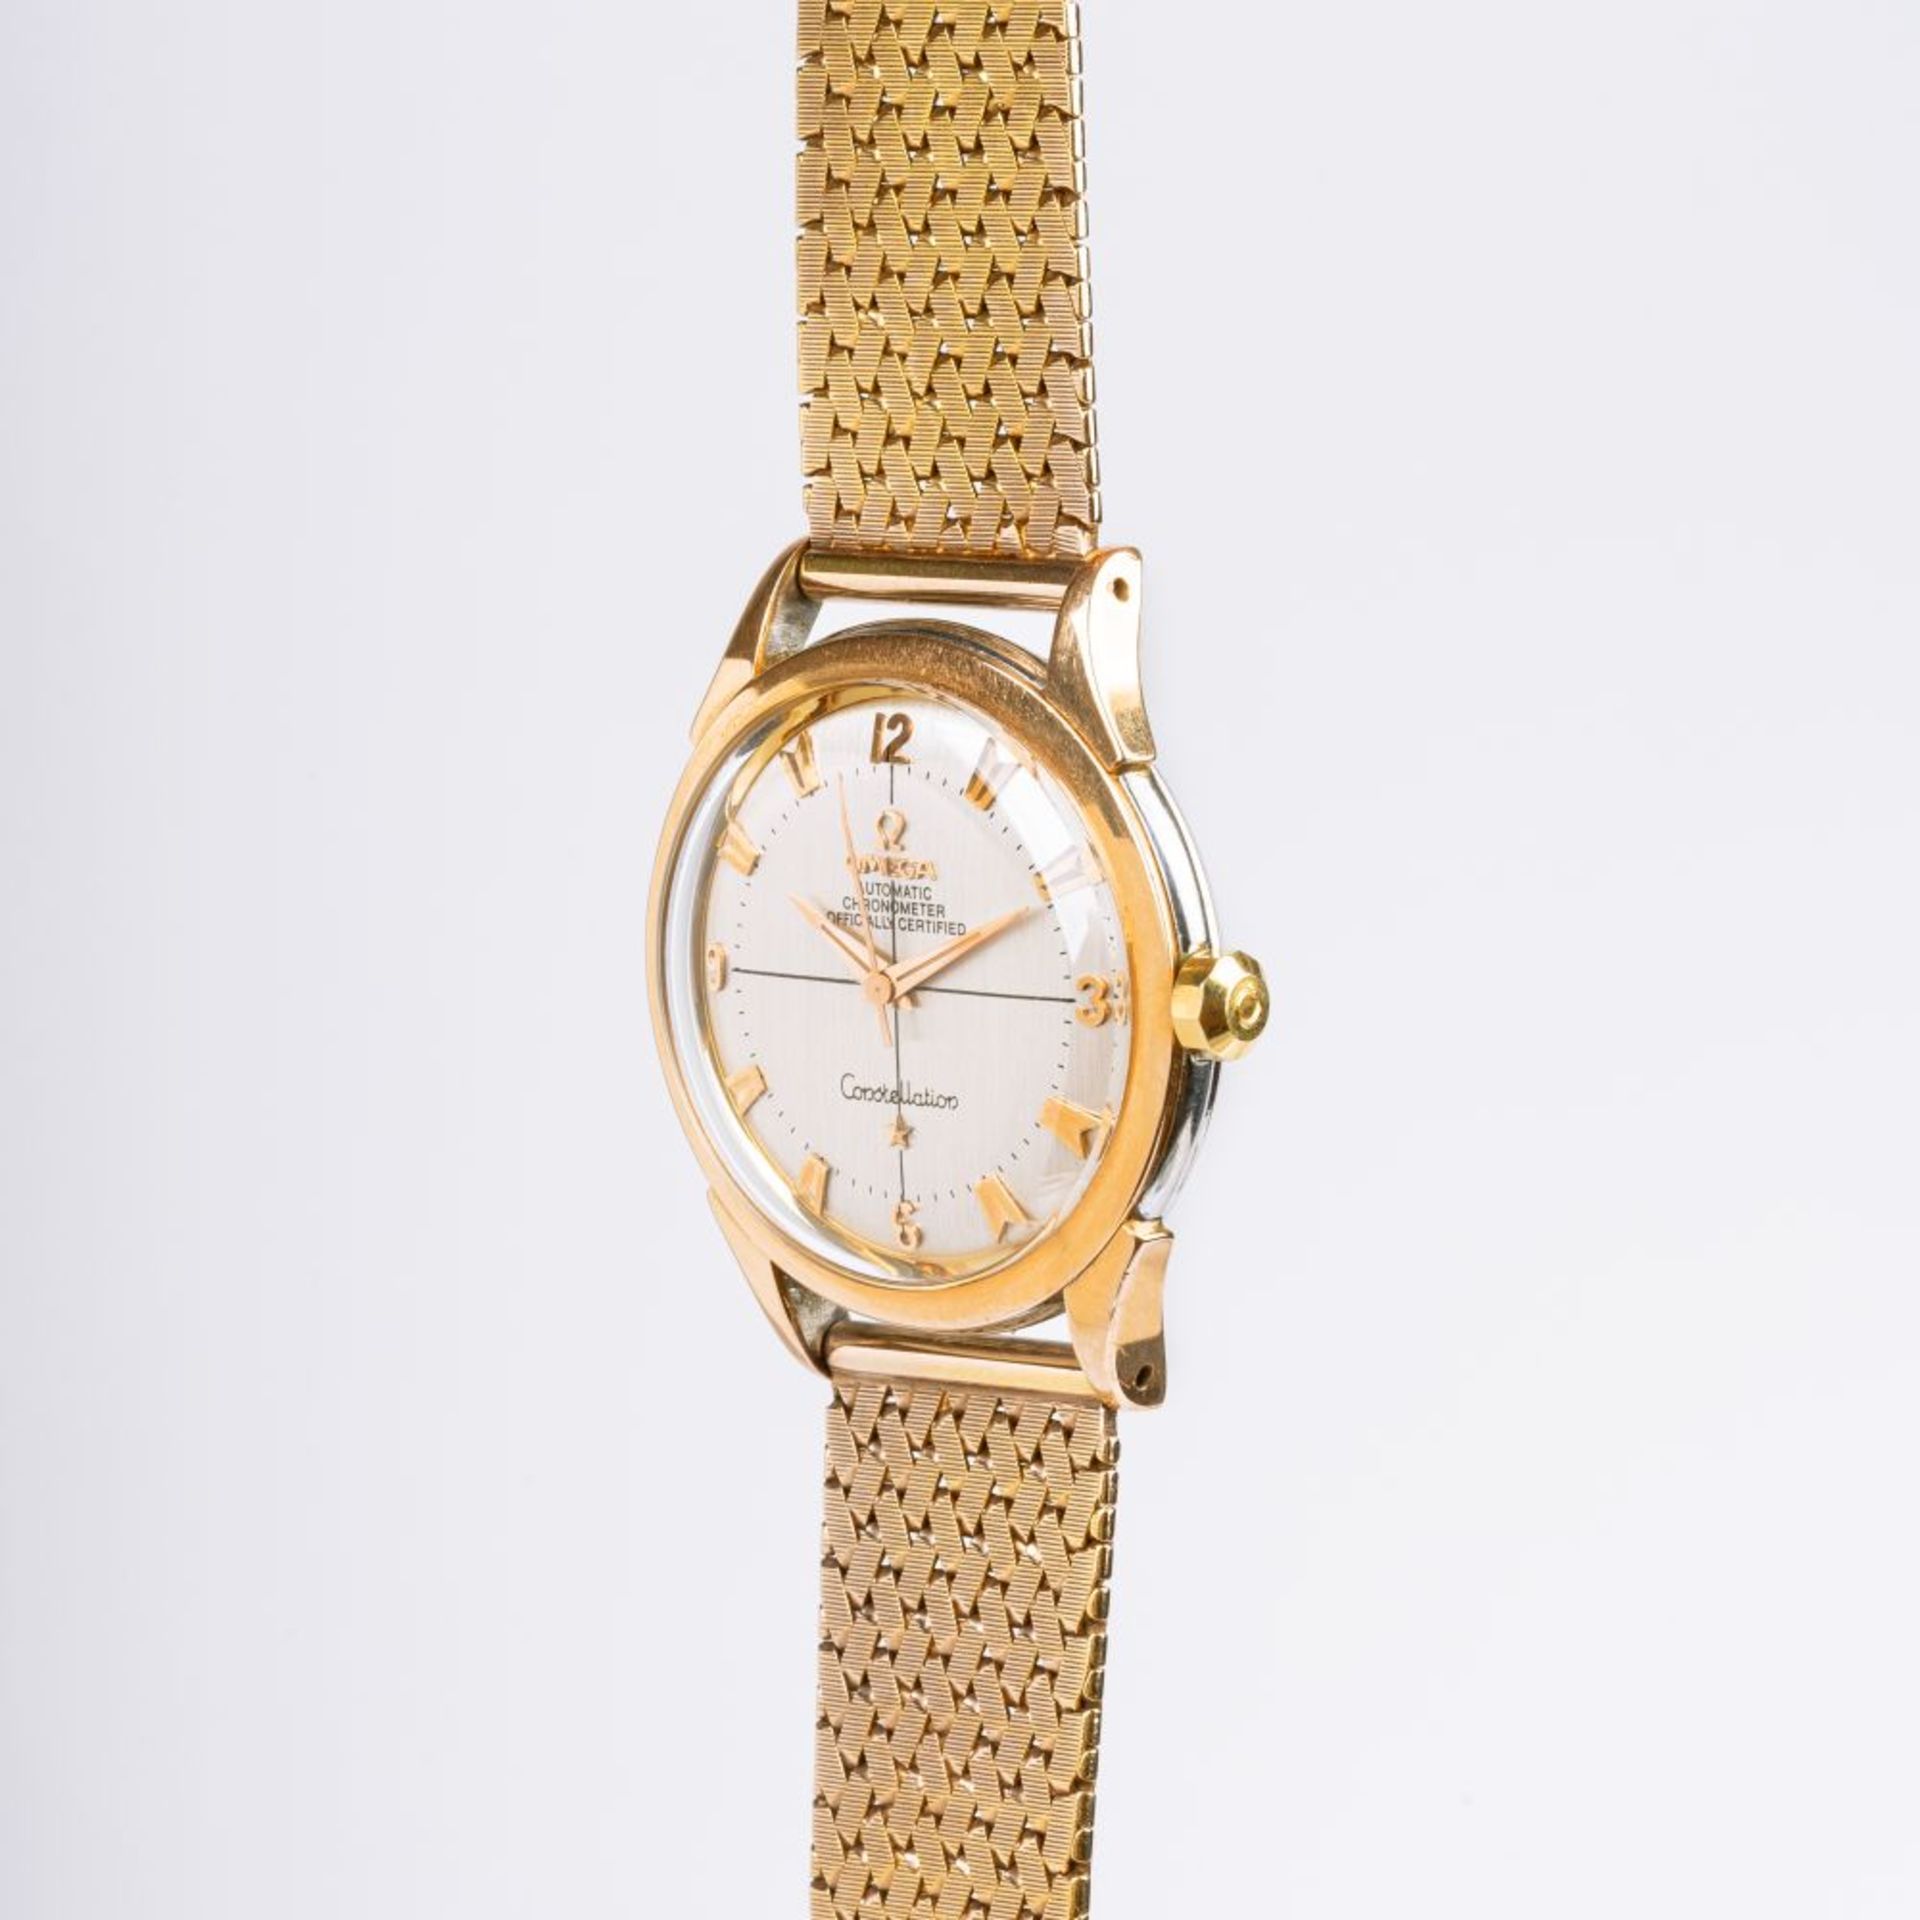 Omega. A Vintage Gentlemen's Wristwatch Constellation. - Image 2 of 2